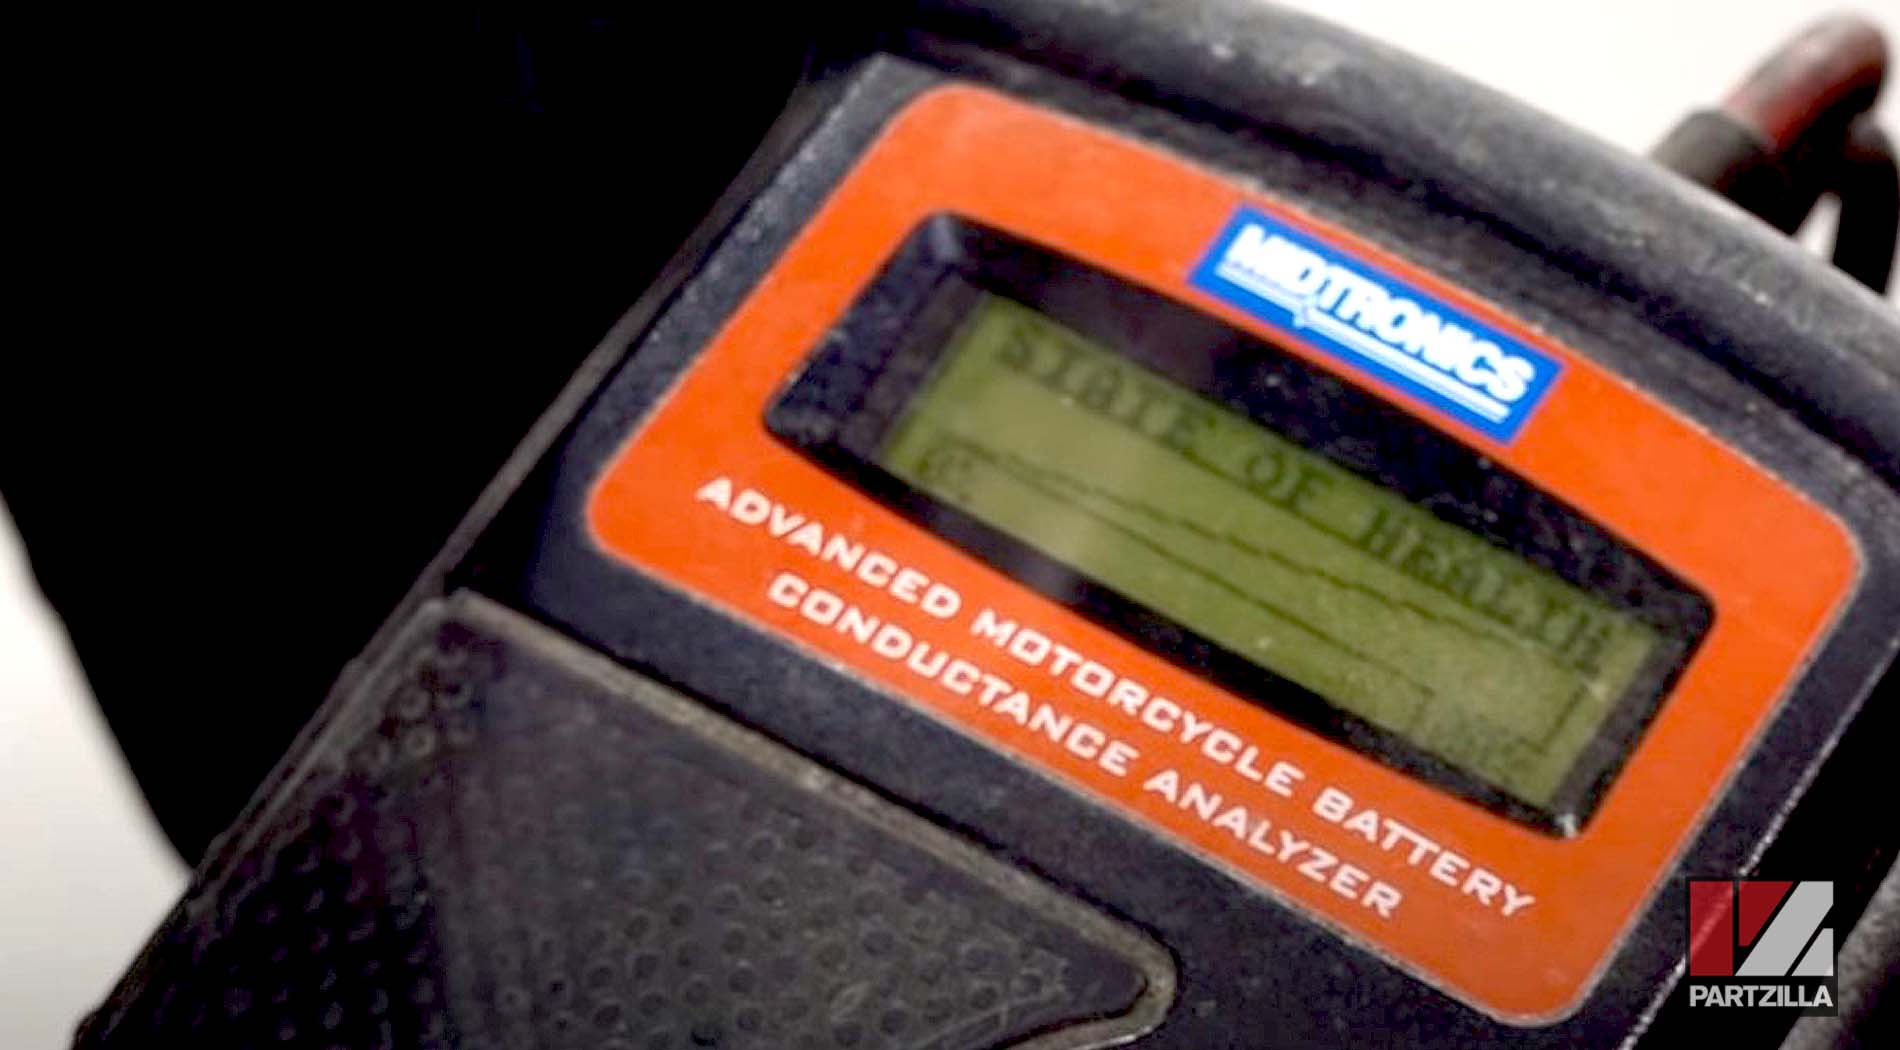 Honda motorcycle battery testing health